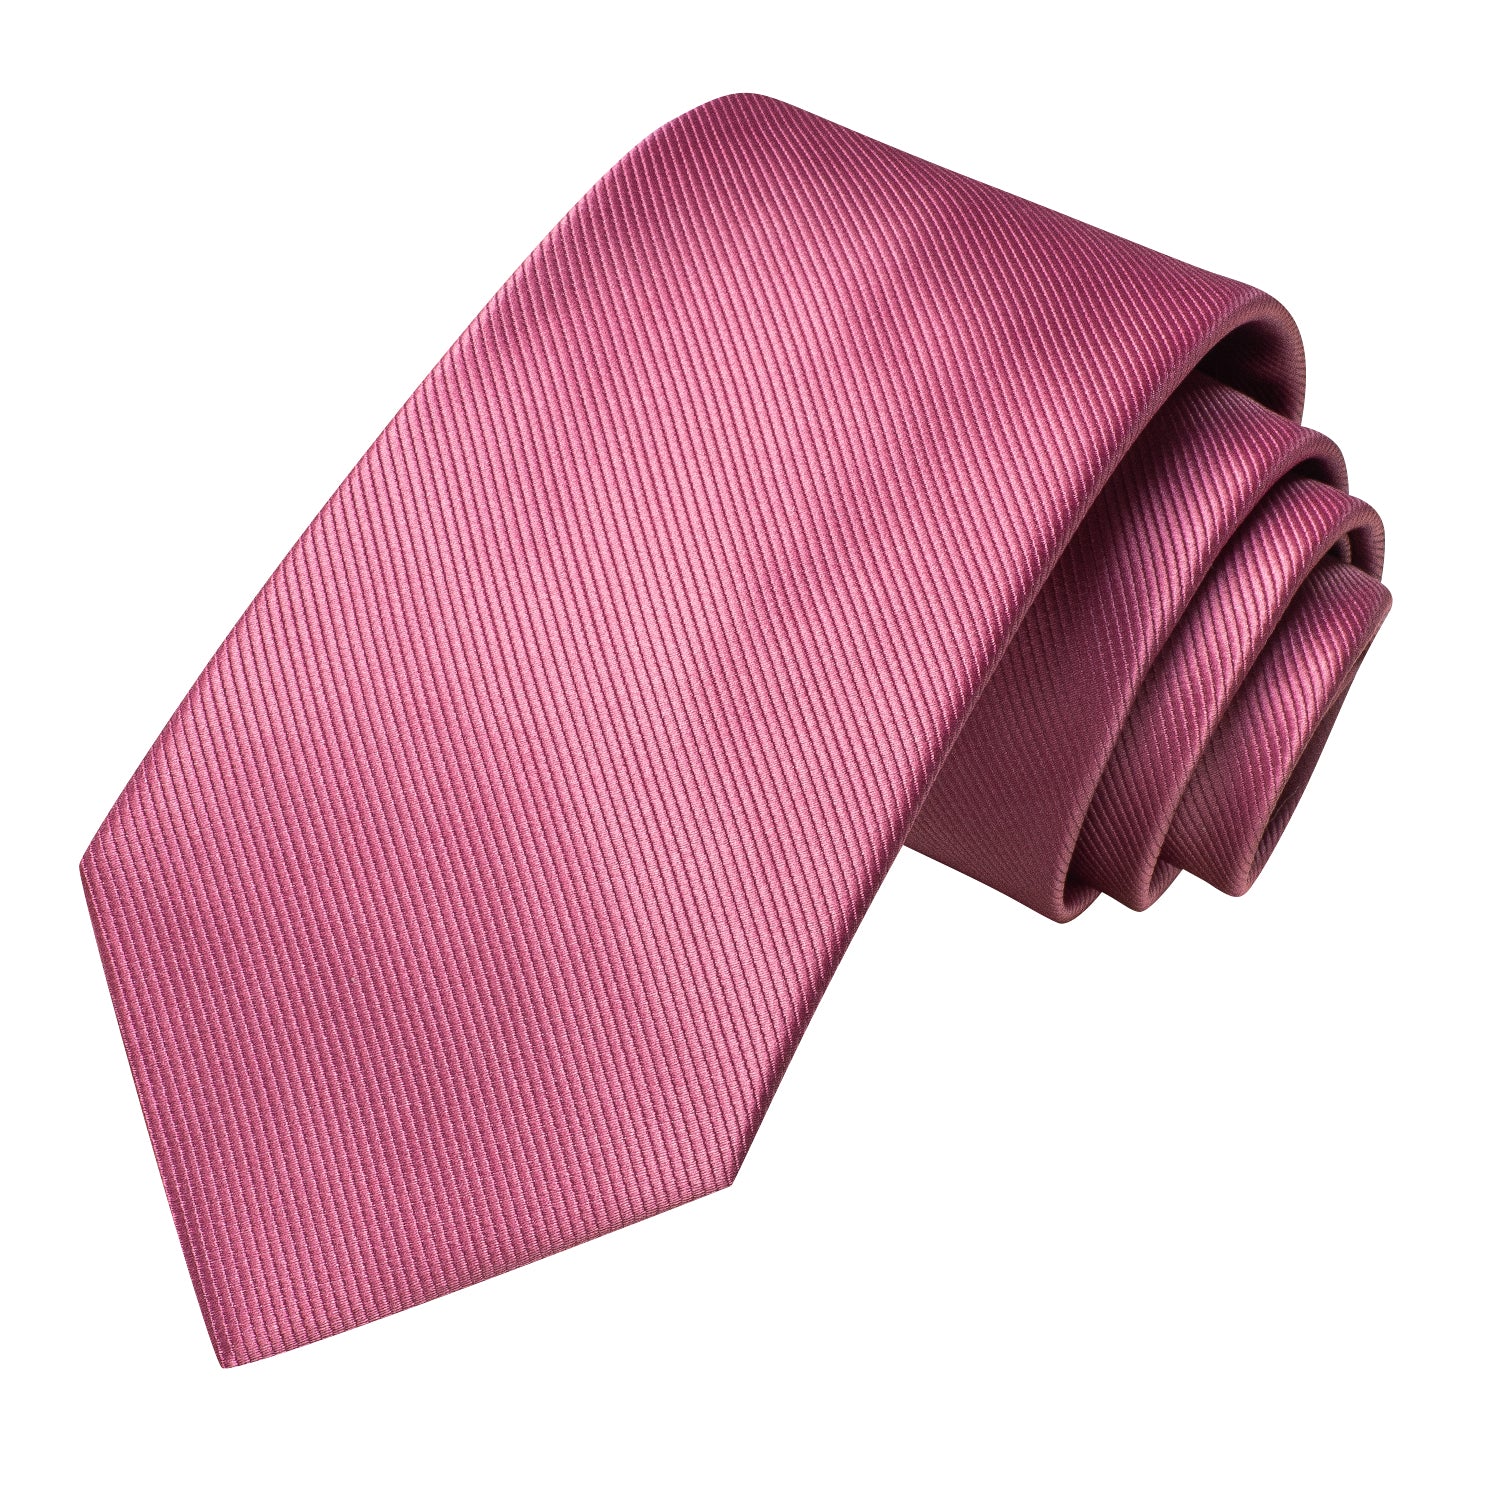 Salmon Pink Solid Tie Pocket Square Cufflinks Set